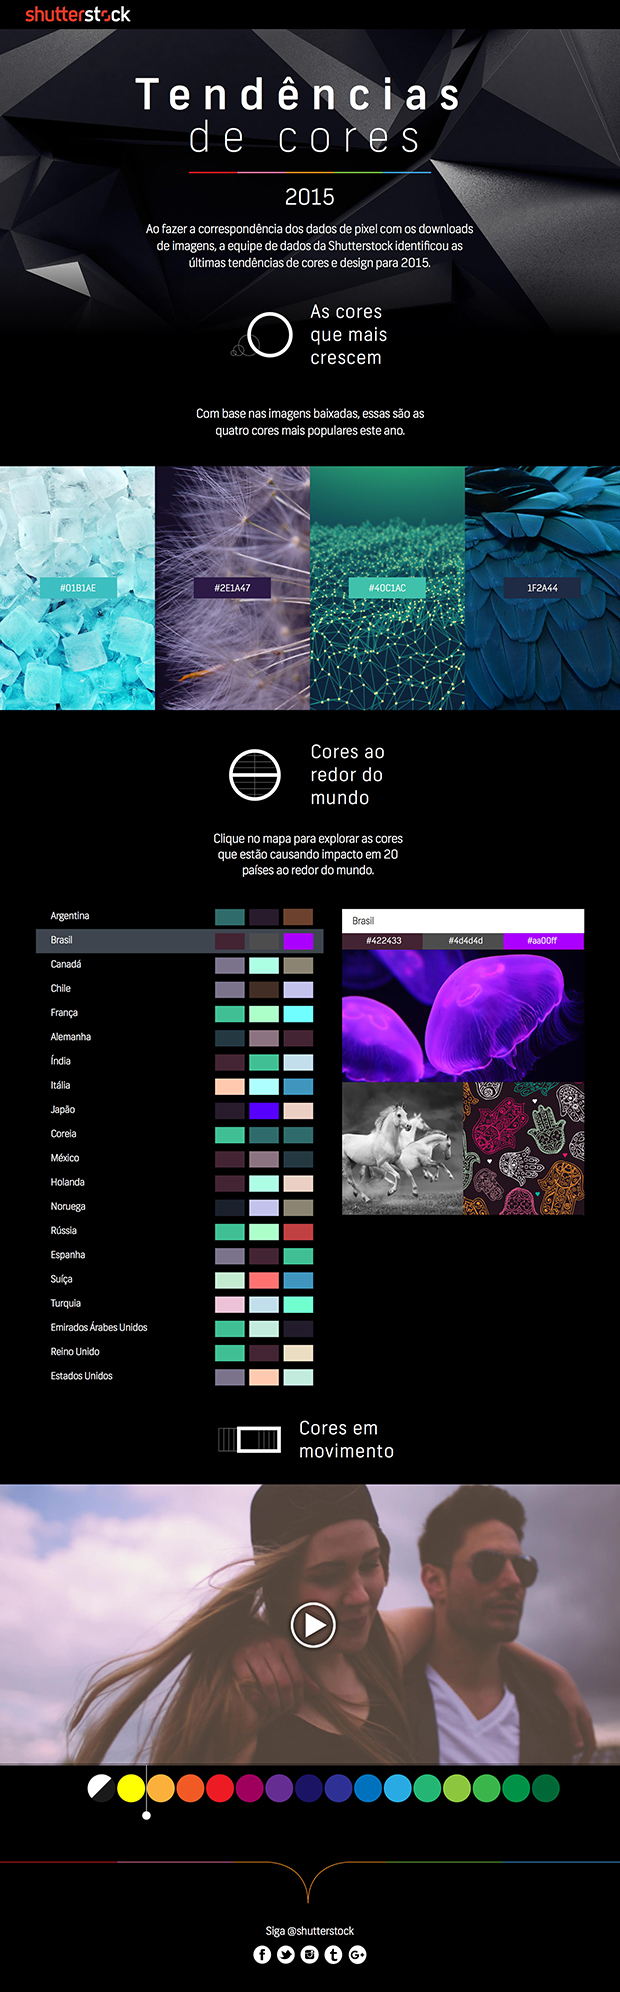 infográfico tendências cores design 2015